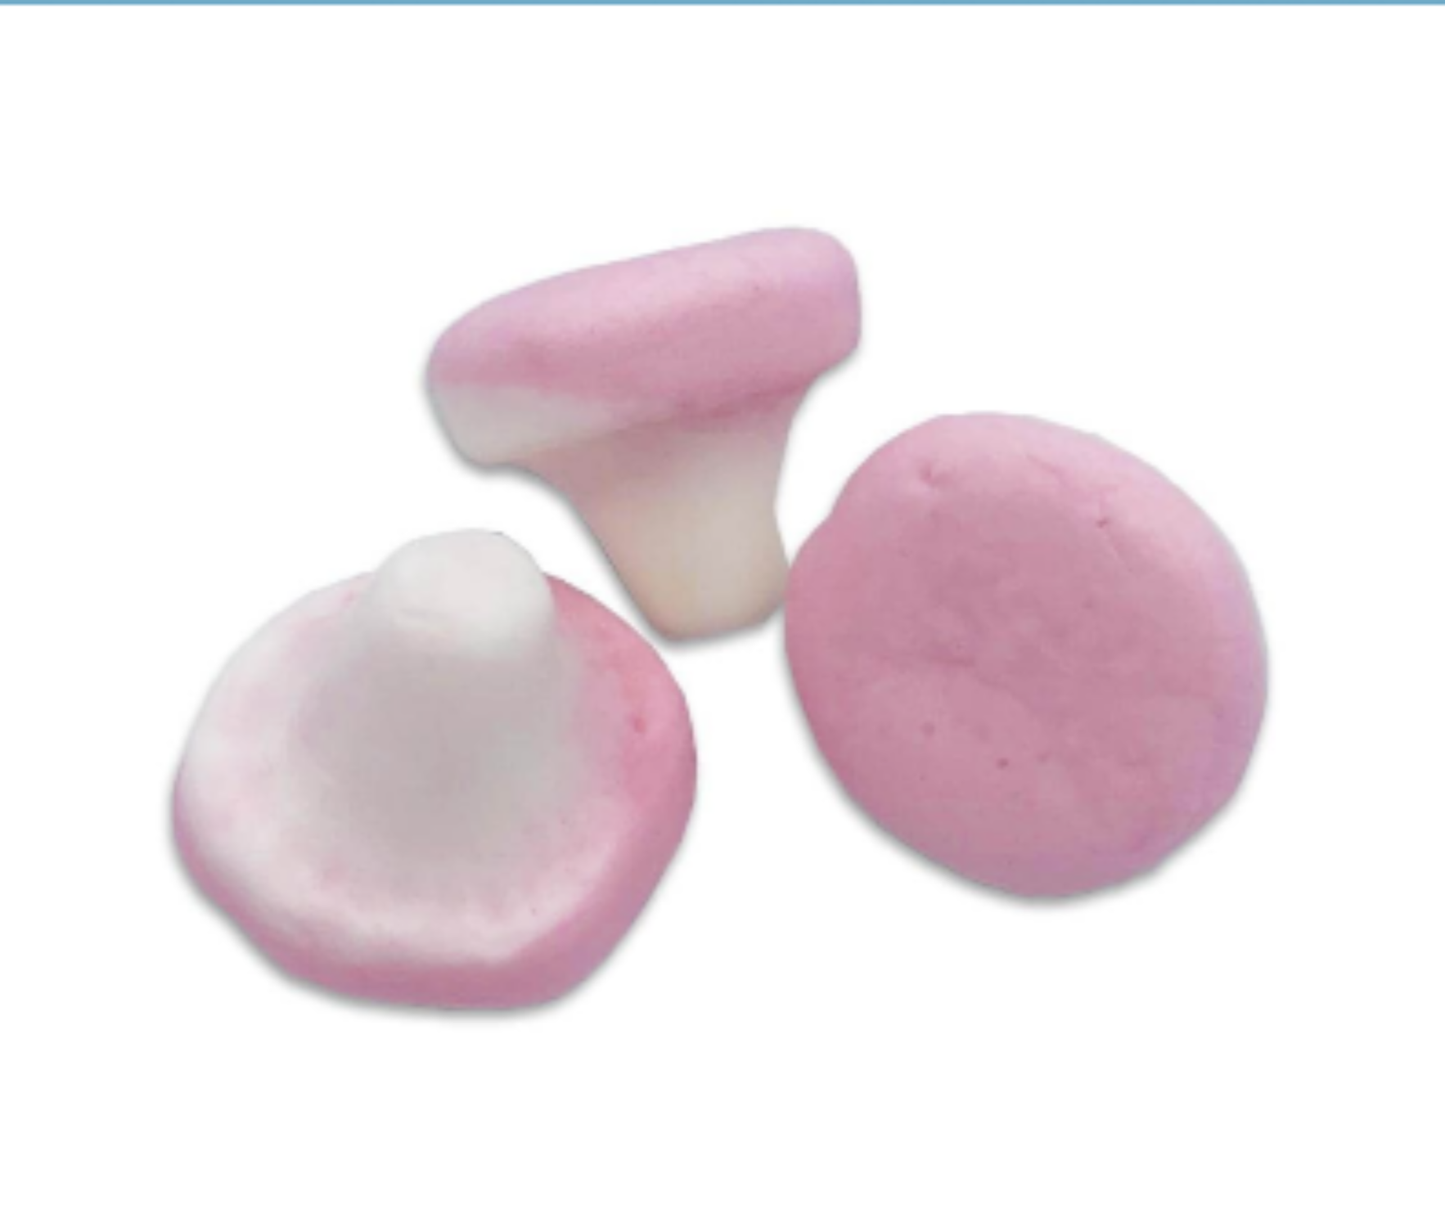 Custom pink coloured mushroom shape sweet for wedding and event in UK